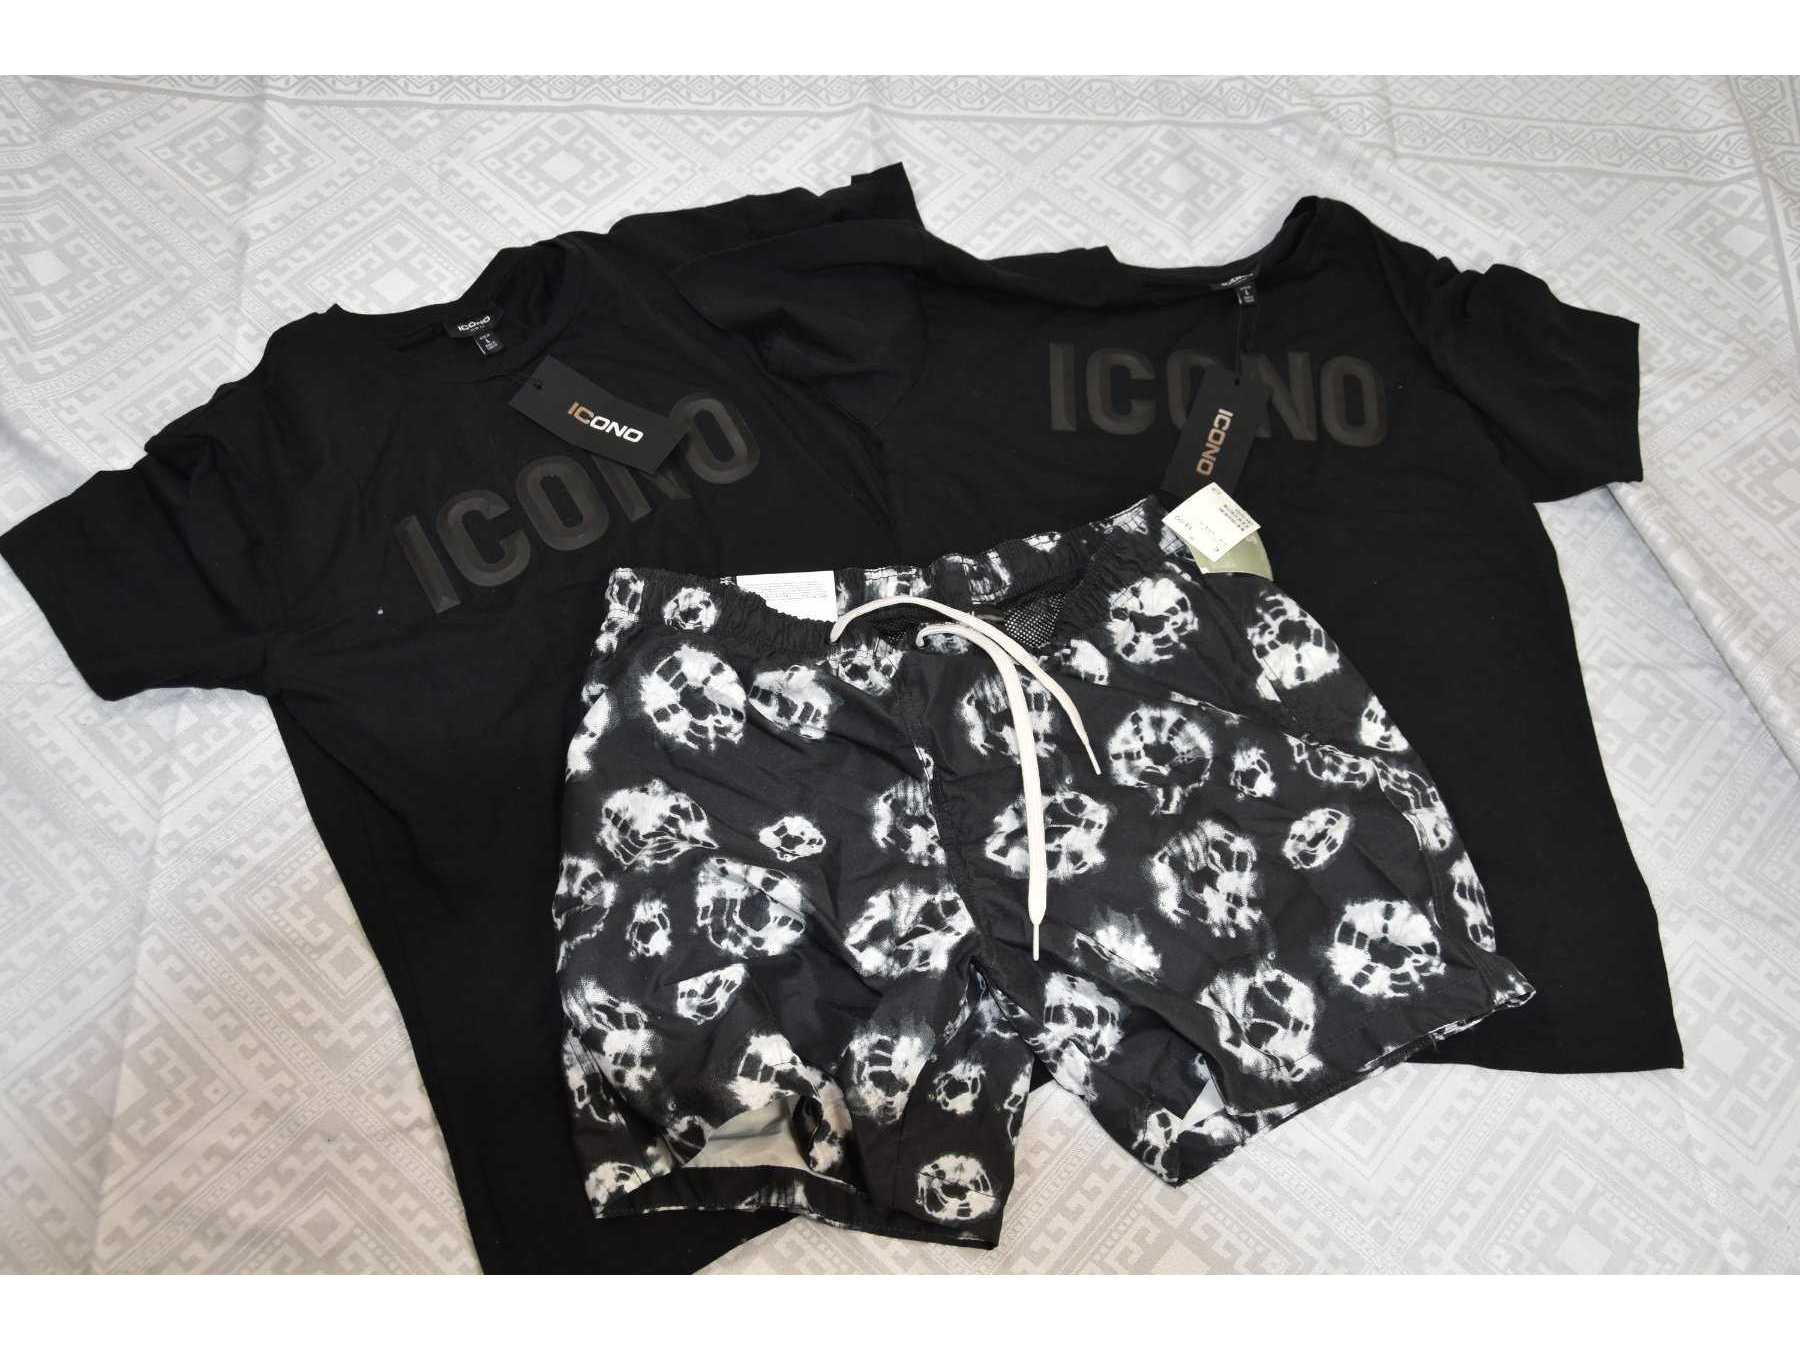 2 schwarze T-Shirt „Icono“ &   	
1 schwarzer Badeshort "H&M"